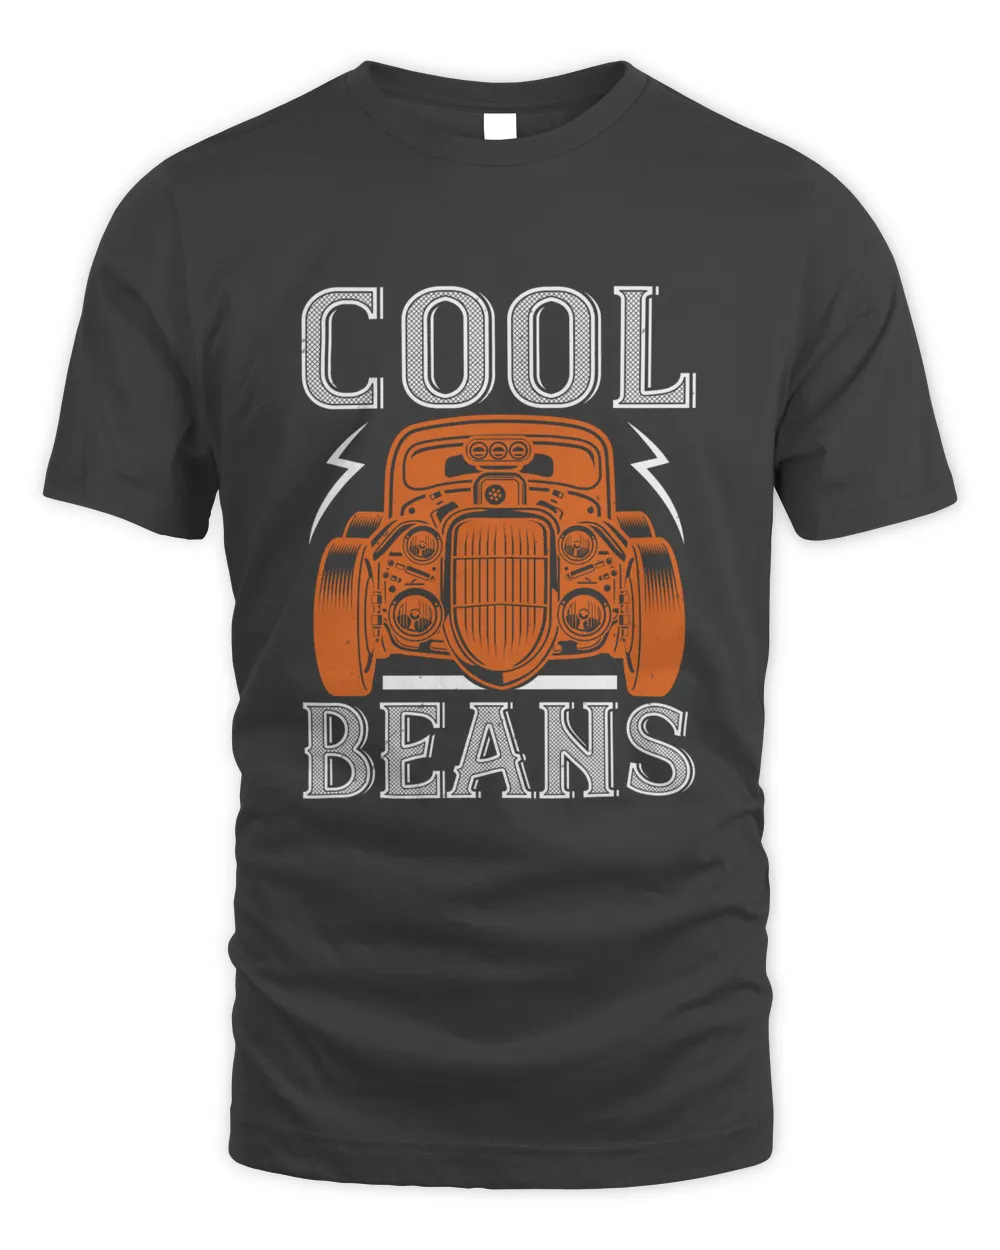 Cool beans-01